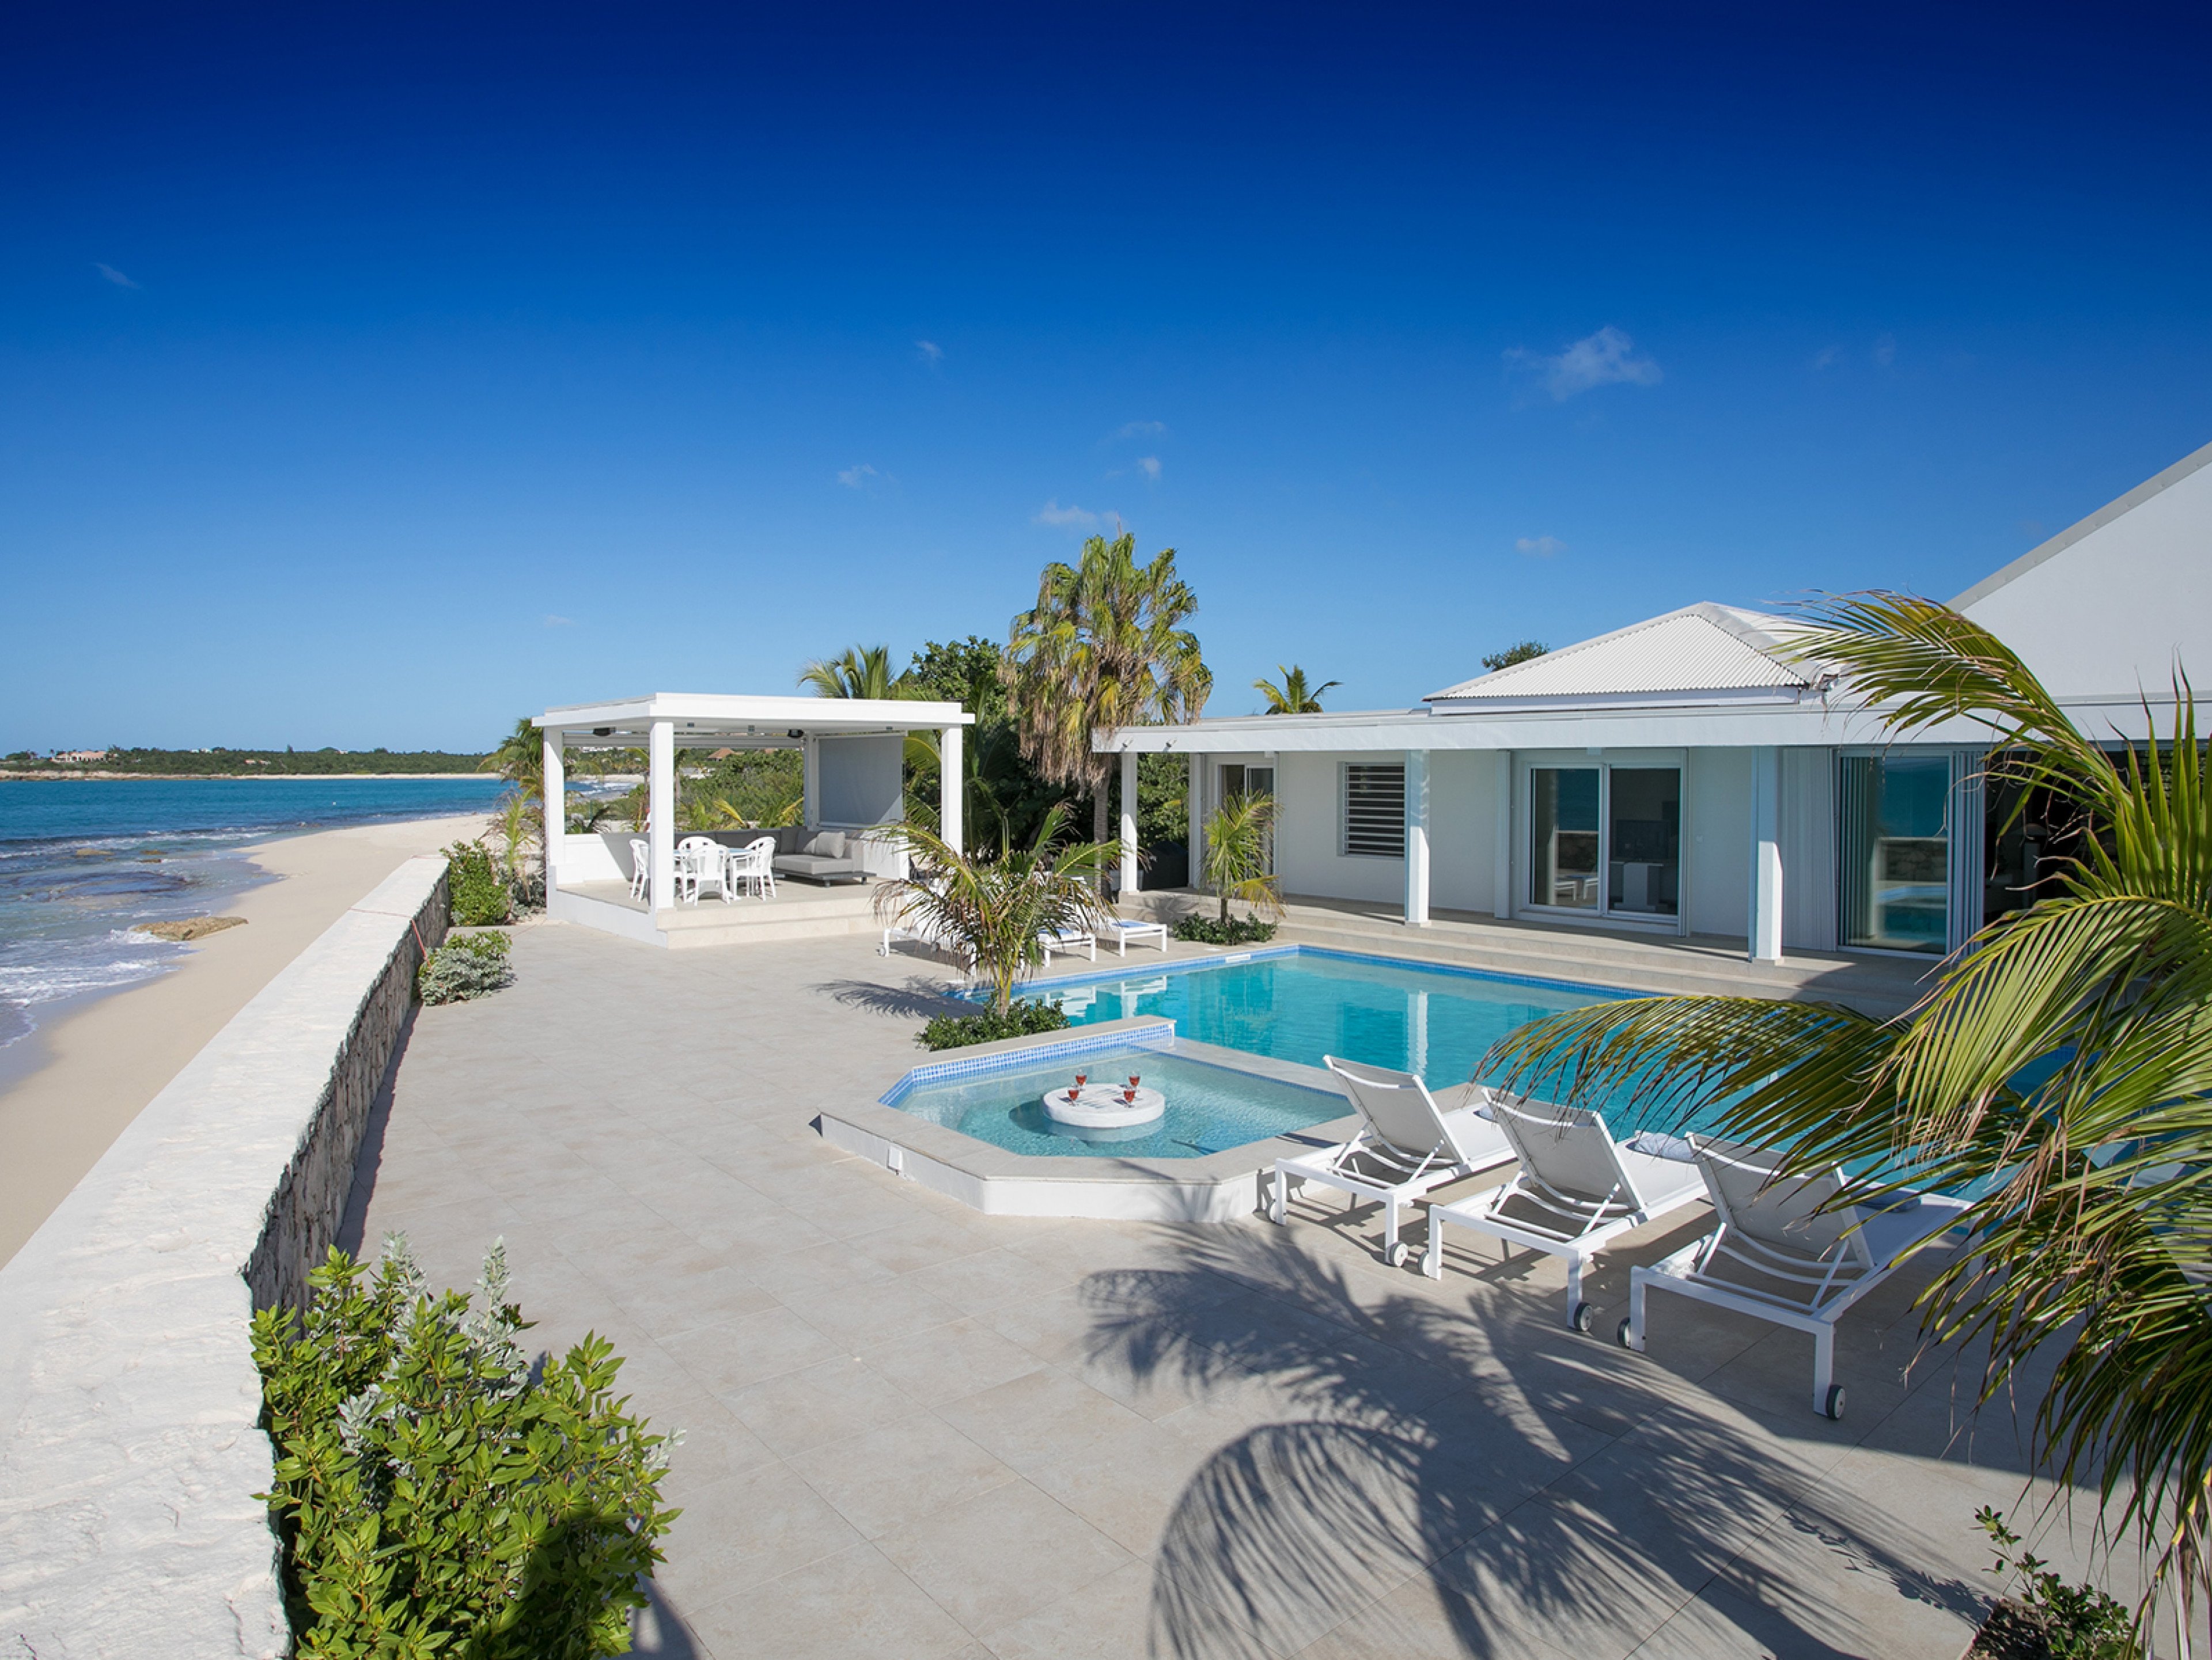 Ecume des Jours villa rentals near Terres Basses beaches